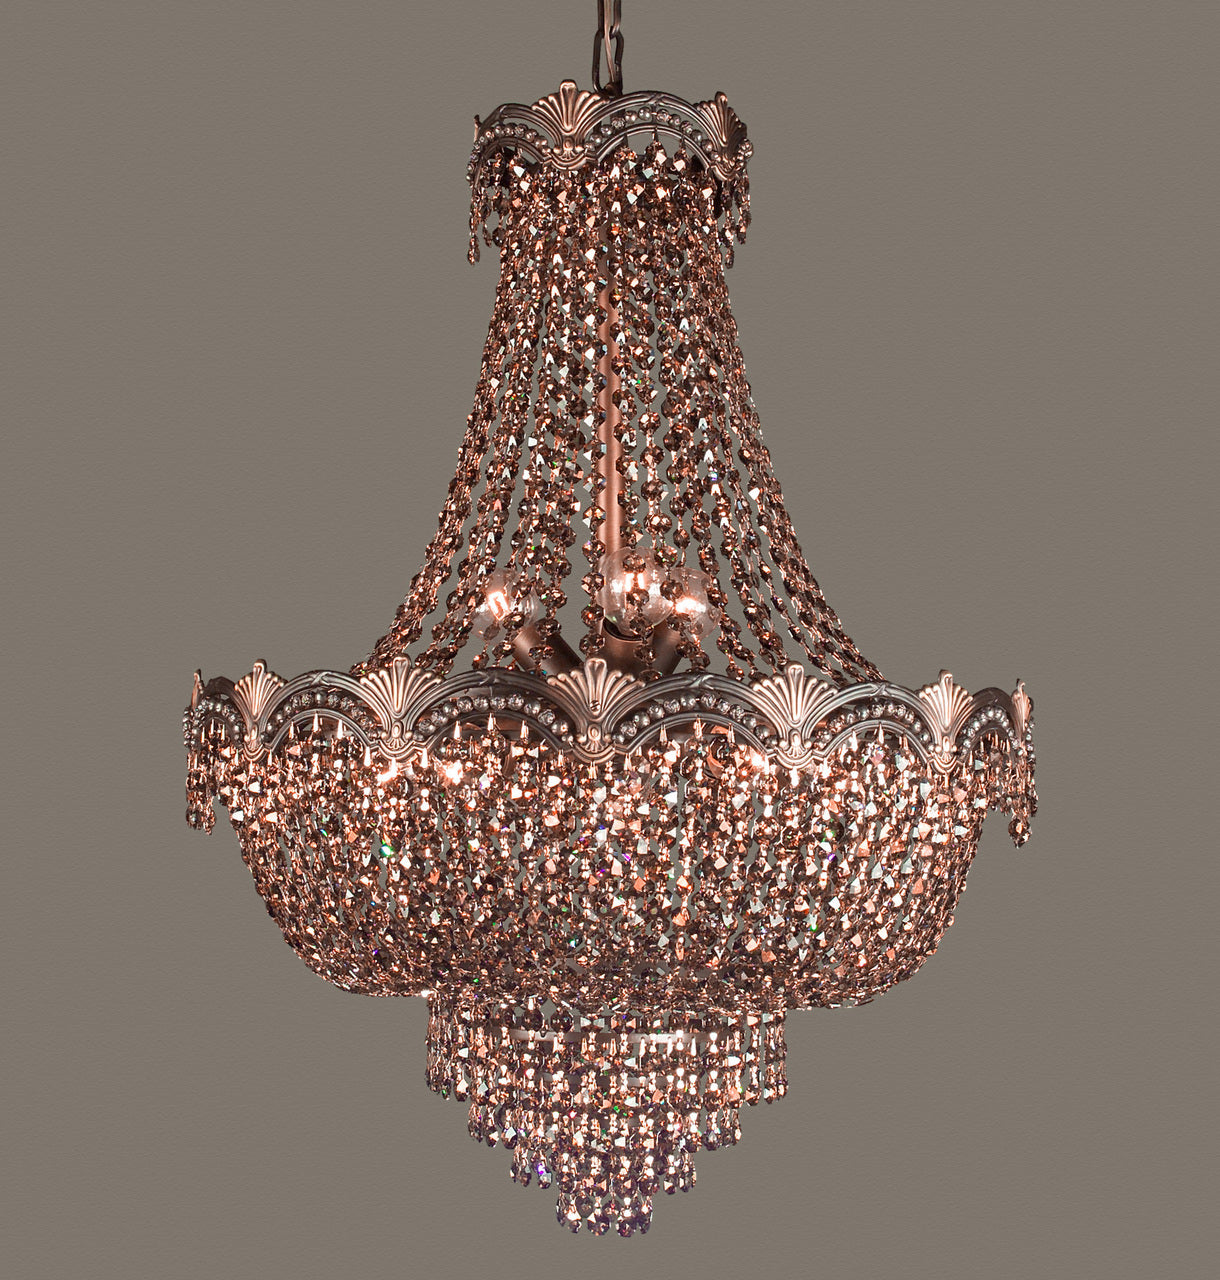 Classic Lighting 1855 RB SGT Regency II Crystal Chandelier in Roman Bronze (Imported from Spain)